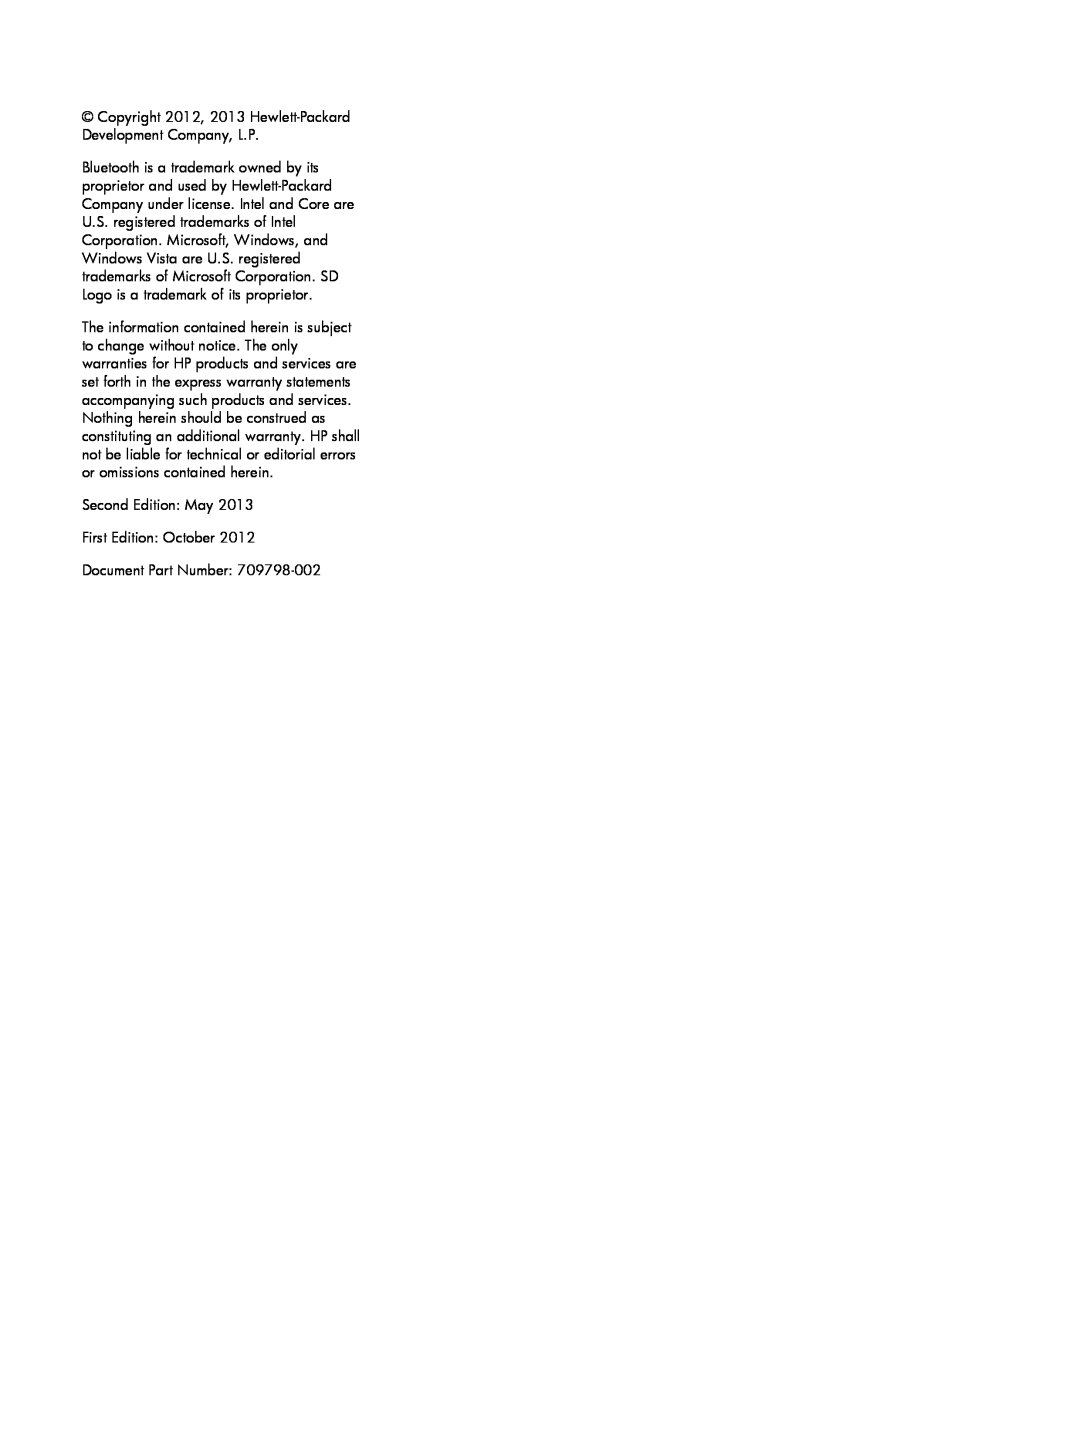 HP 9470m i7 Win8 D3K33UT#ABA manual Copyright 2012, 2013 Hewlett-Packard Development Company, L.P 